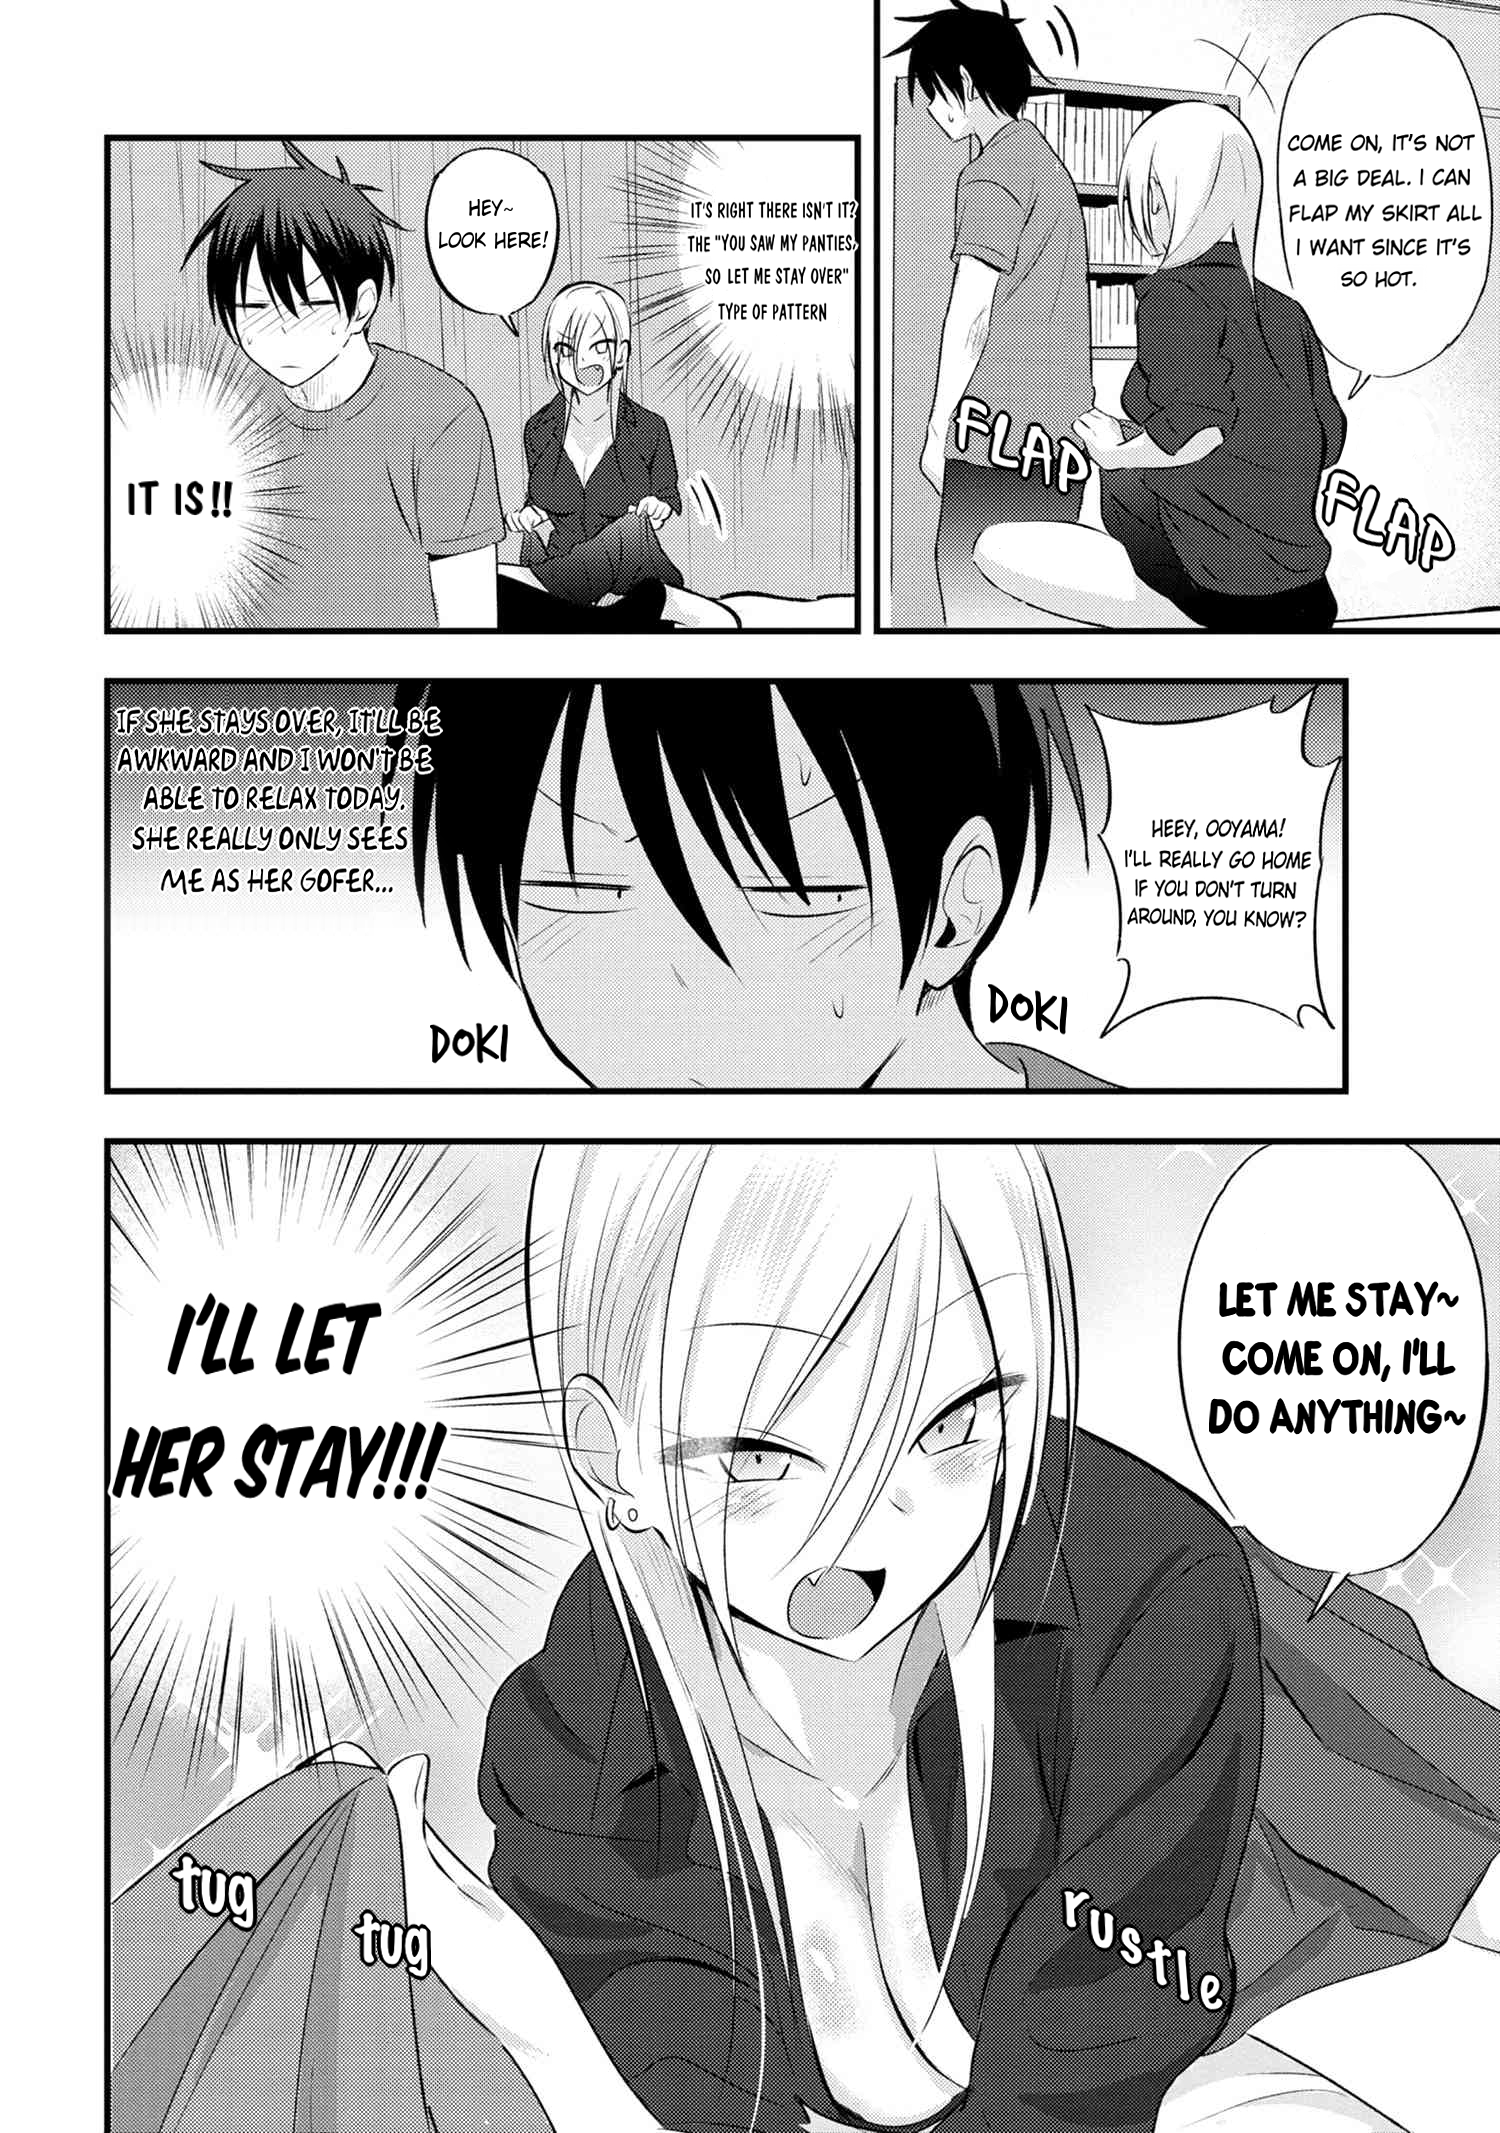 Please Go Home, Akutsu-San! - Page 2